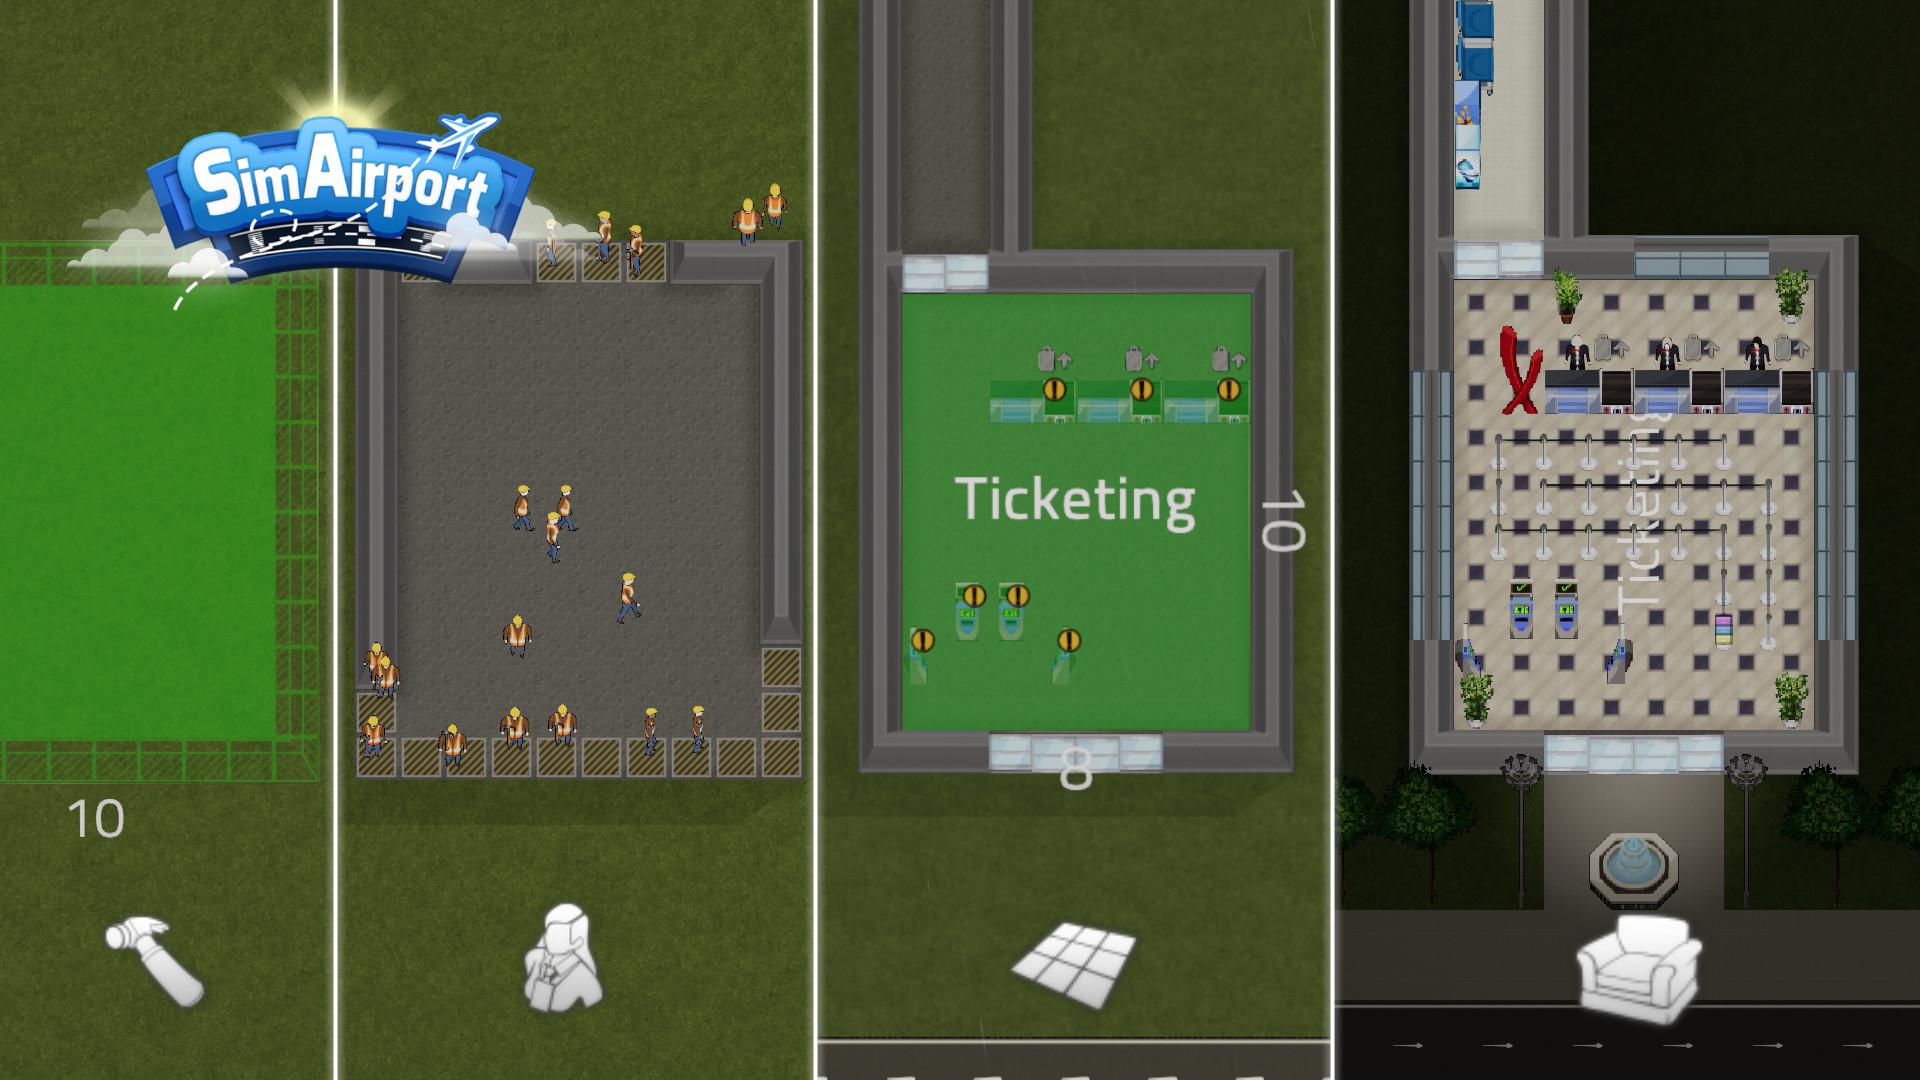 Screenshot №4 from game SimAirport